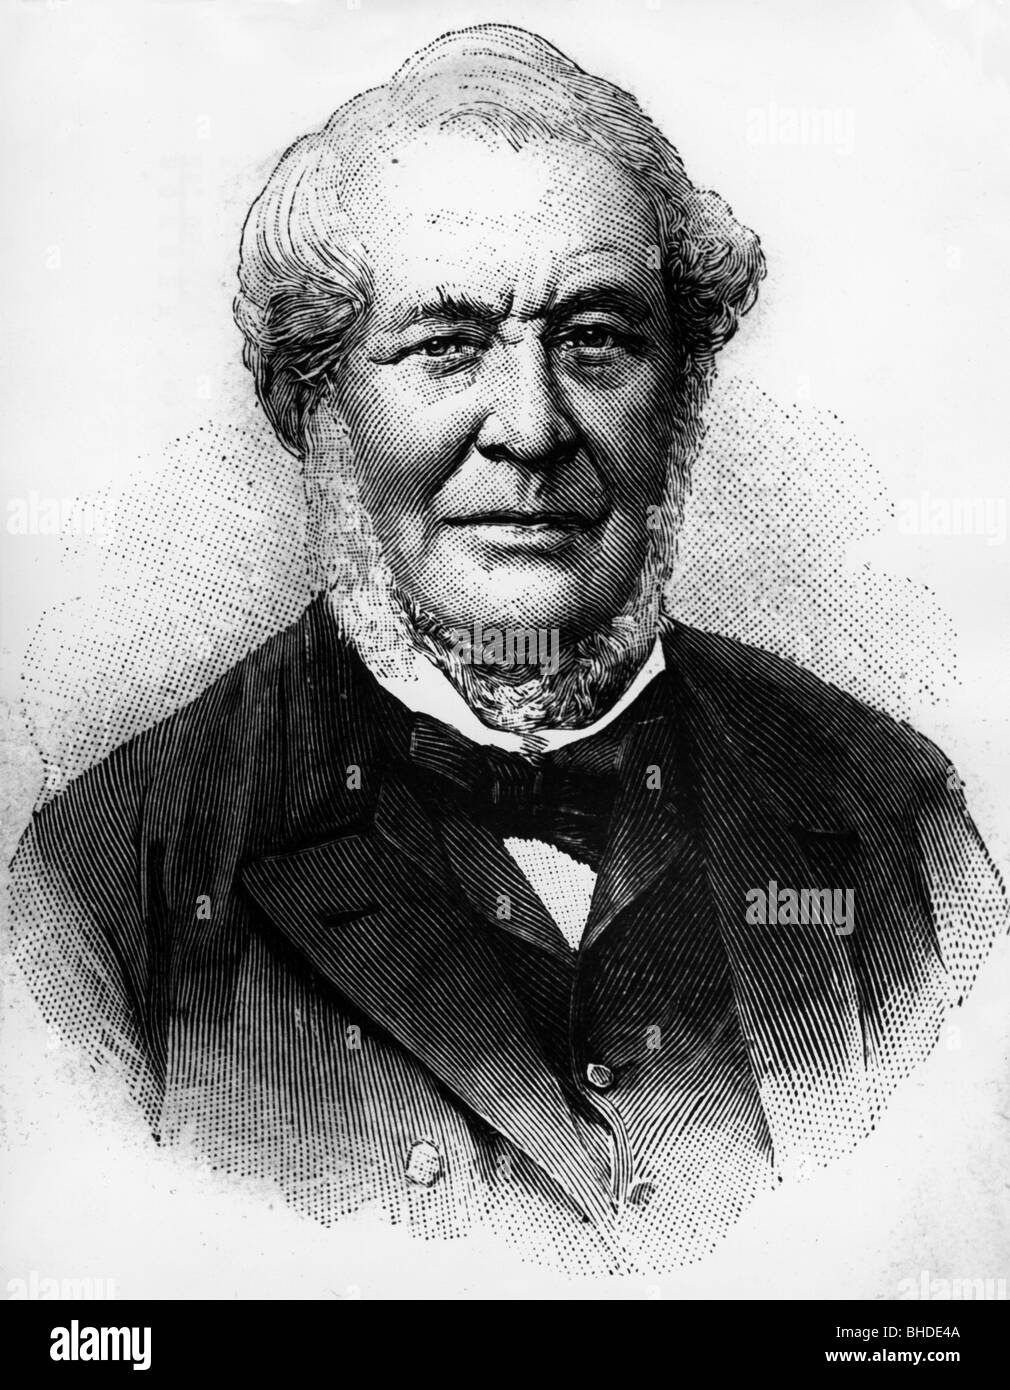 Bunsen, Robert Wilhelm, 30.3.1811 - 16.8.1899, German chemist, portrait, wood engraving, late 19th century, after photo by Eduard Schultze, Stock Photo